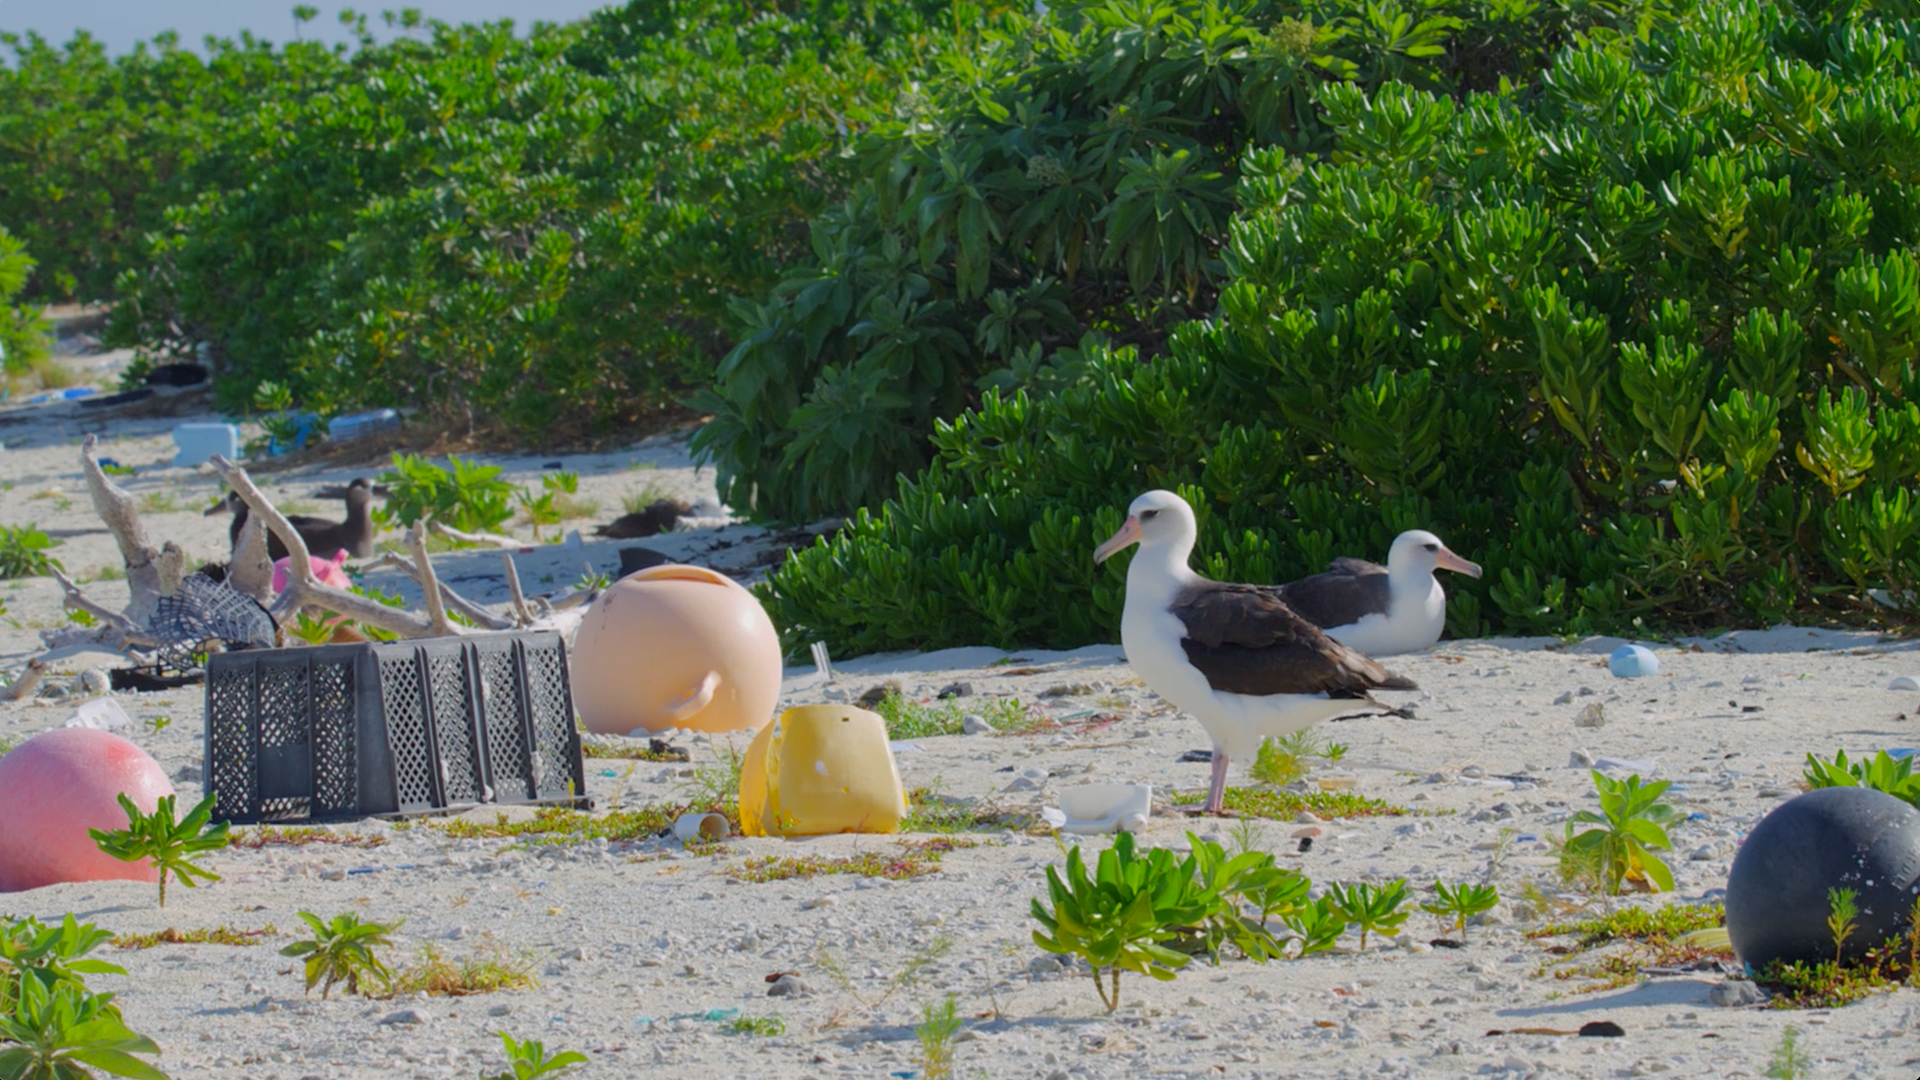 Pacific Plastic 8 Debris Beach Birds 1080x.png